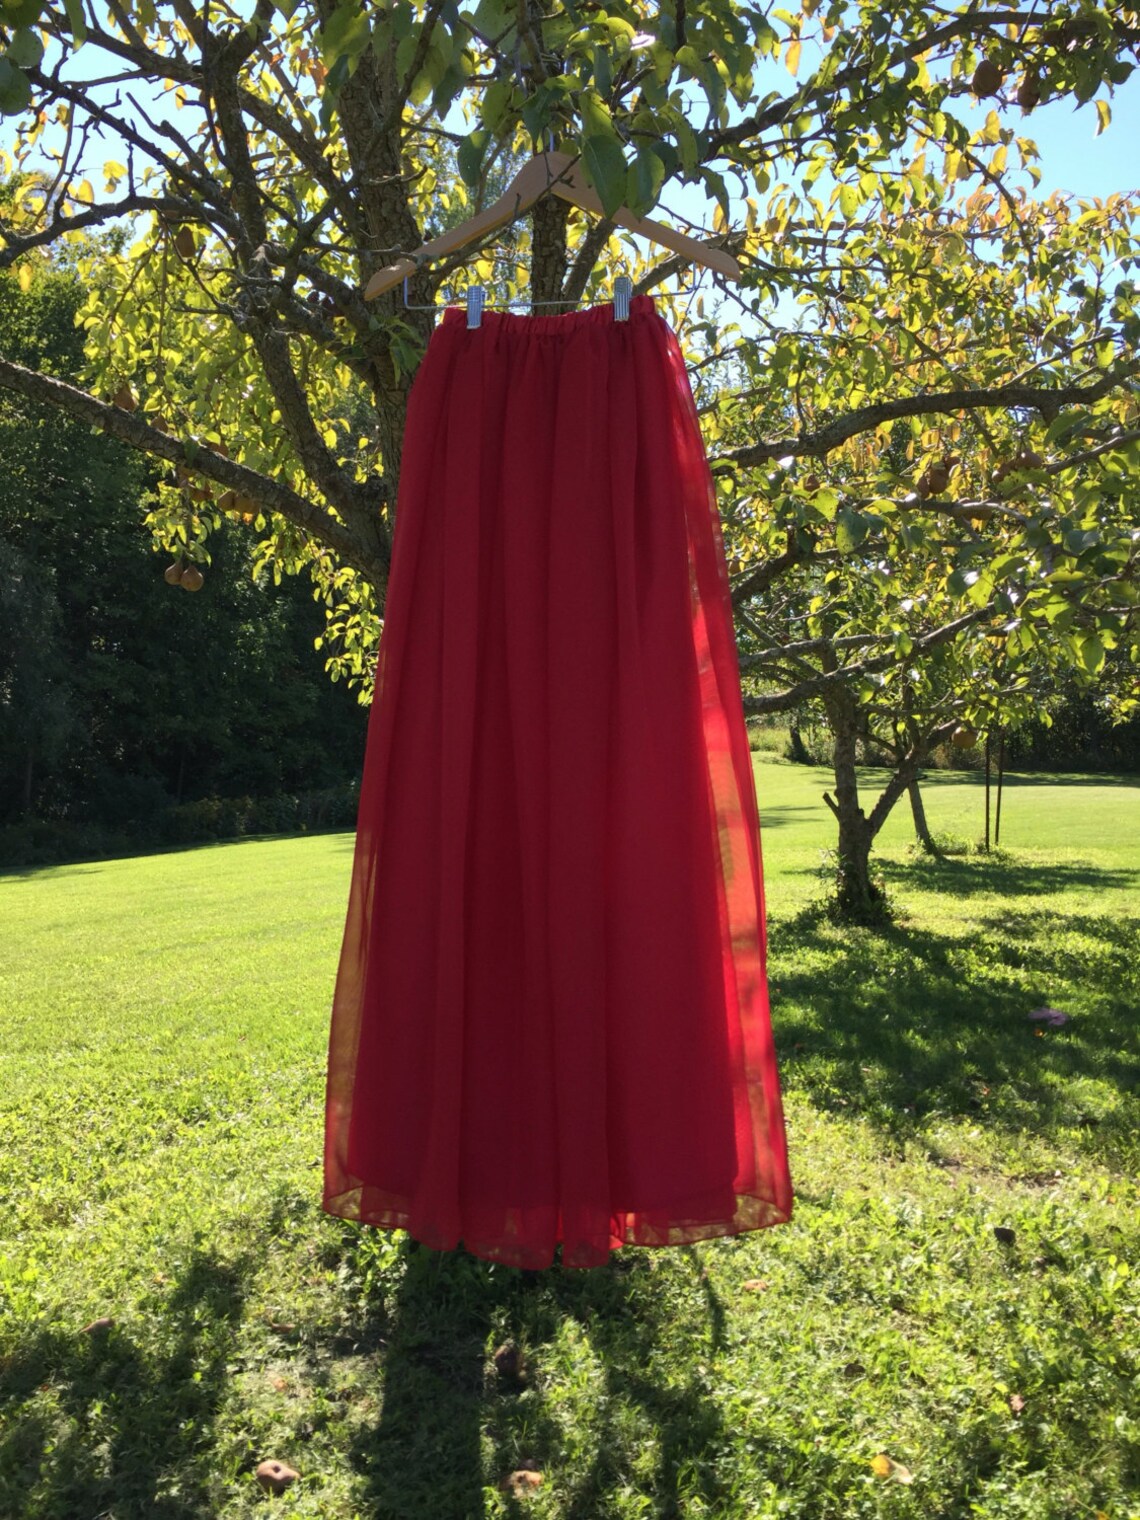 Red Chiffon Skirt Any Length and Color Bridesmaid Skirt | Etsy